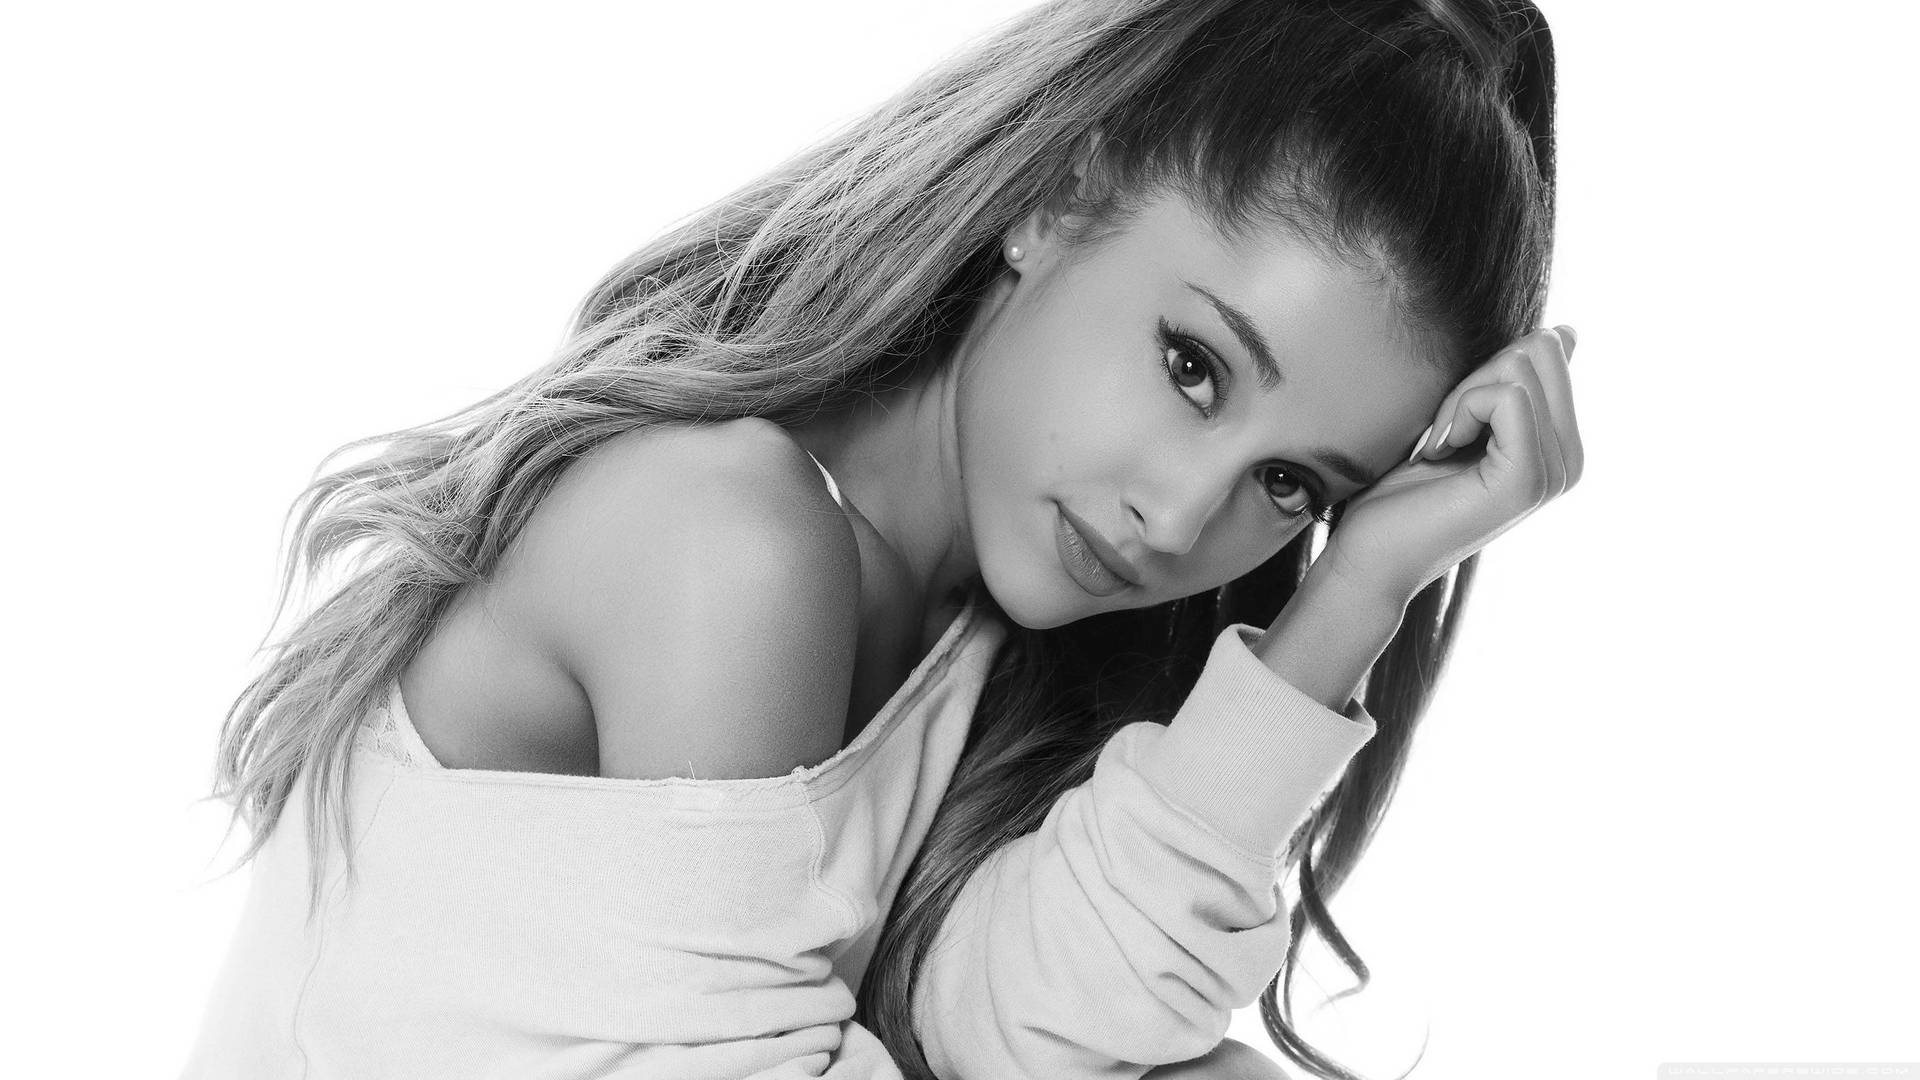 100+] Ariana Grande Wallpapers 